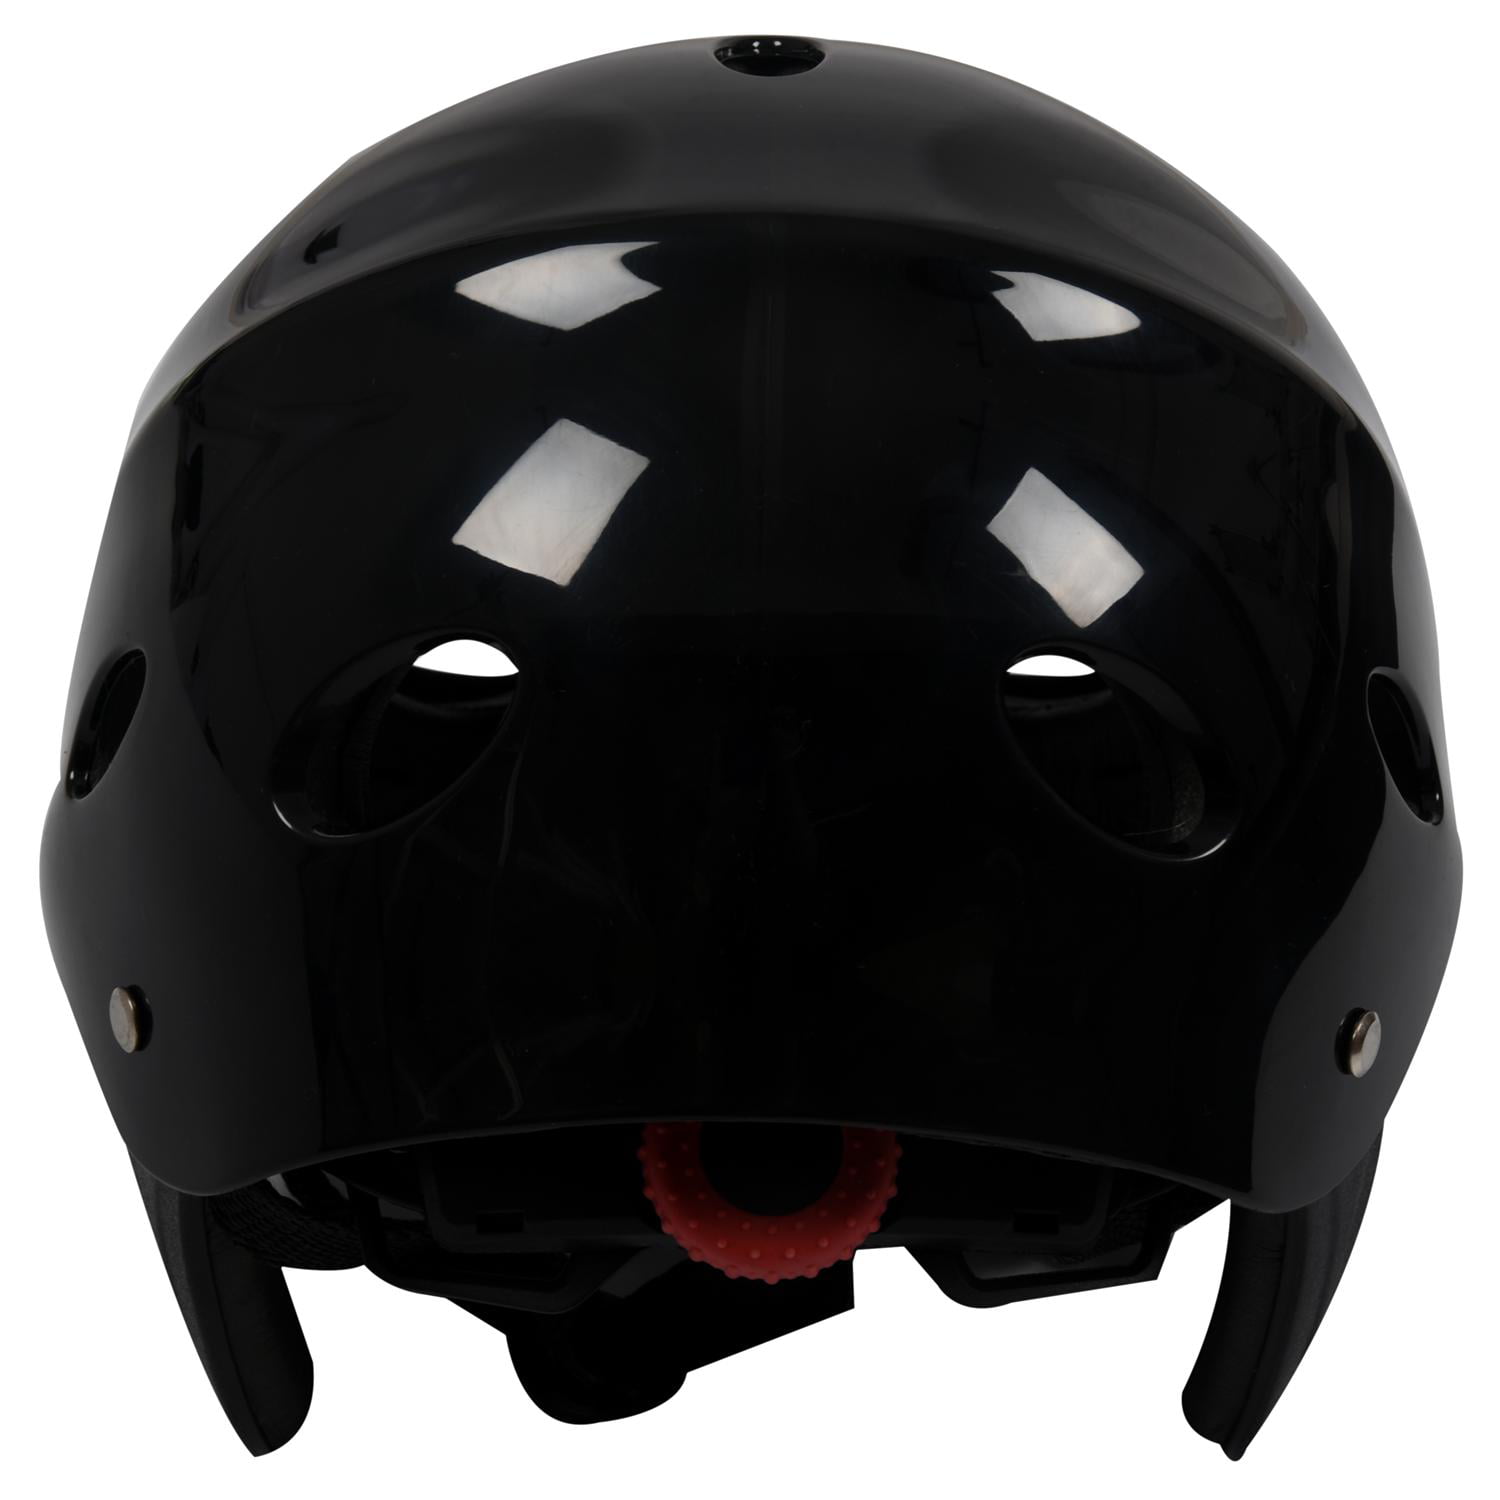 Blue Etase Safety Protector Helmet 11 Breathing Holes for Water Sports Kayak Canoe Surf Paddleboard